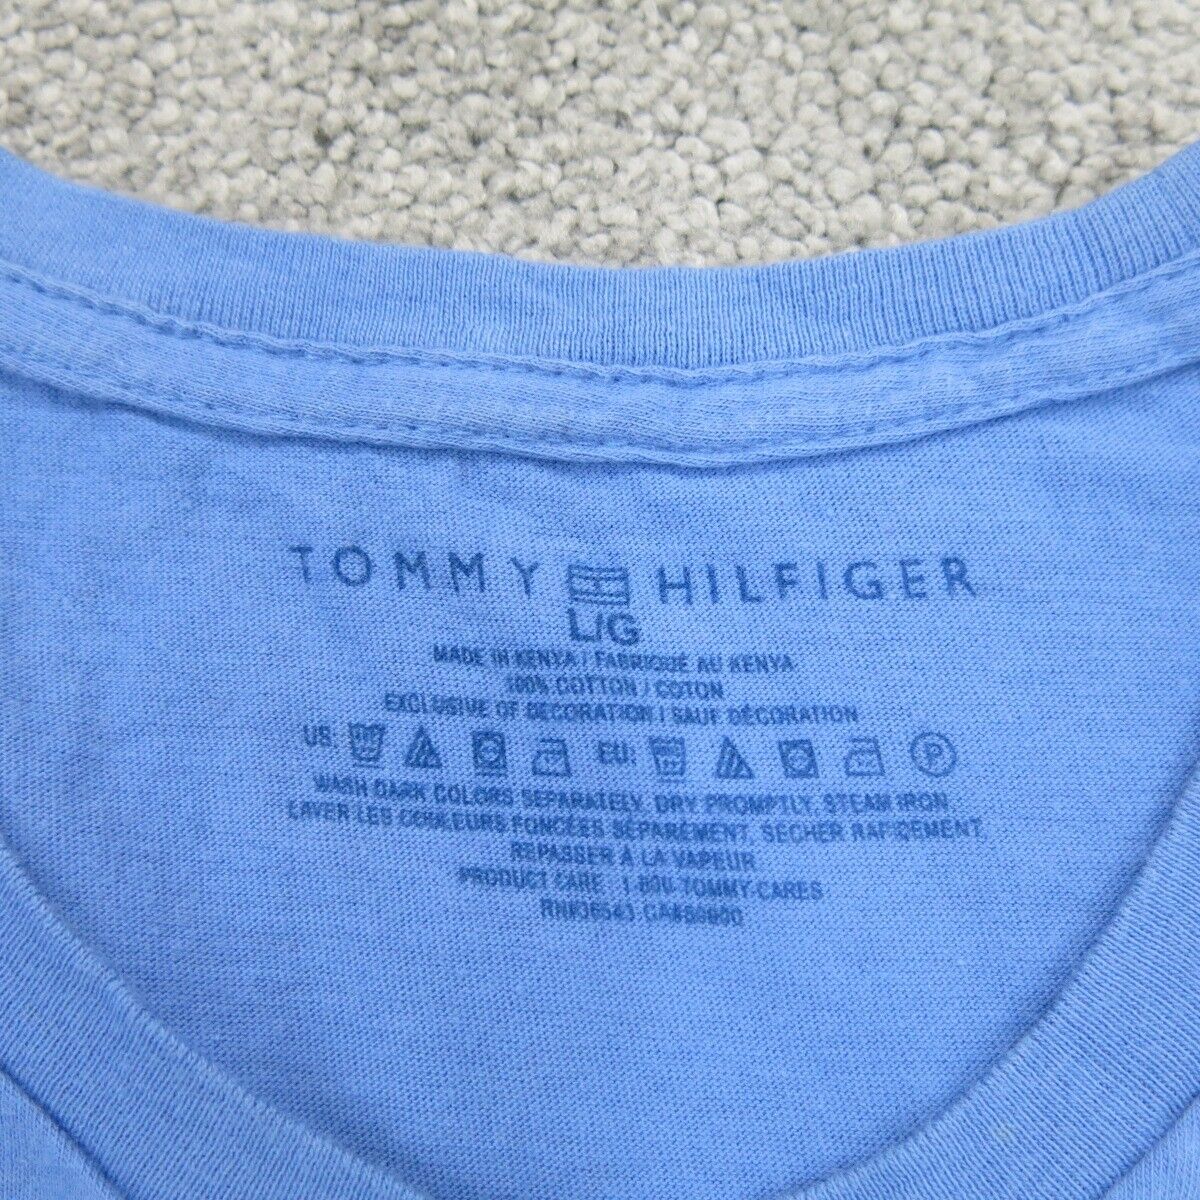 Tommy Hilfiger Mens Crew T Shirt Short Sleeves 100% Cotton Blue Logo Size Large